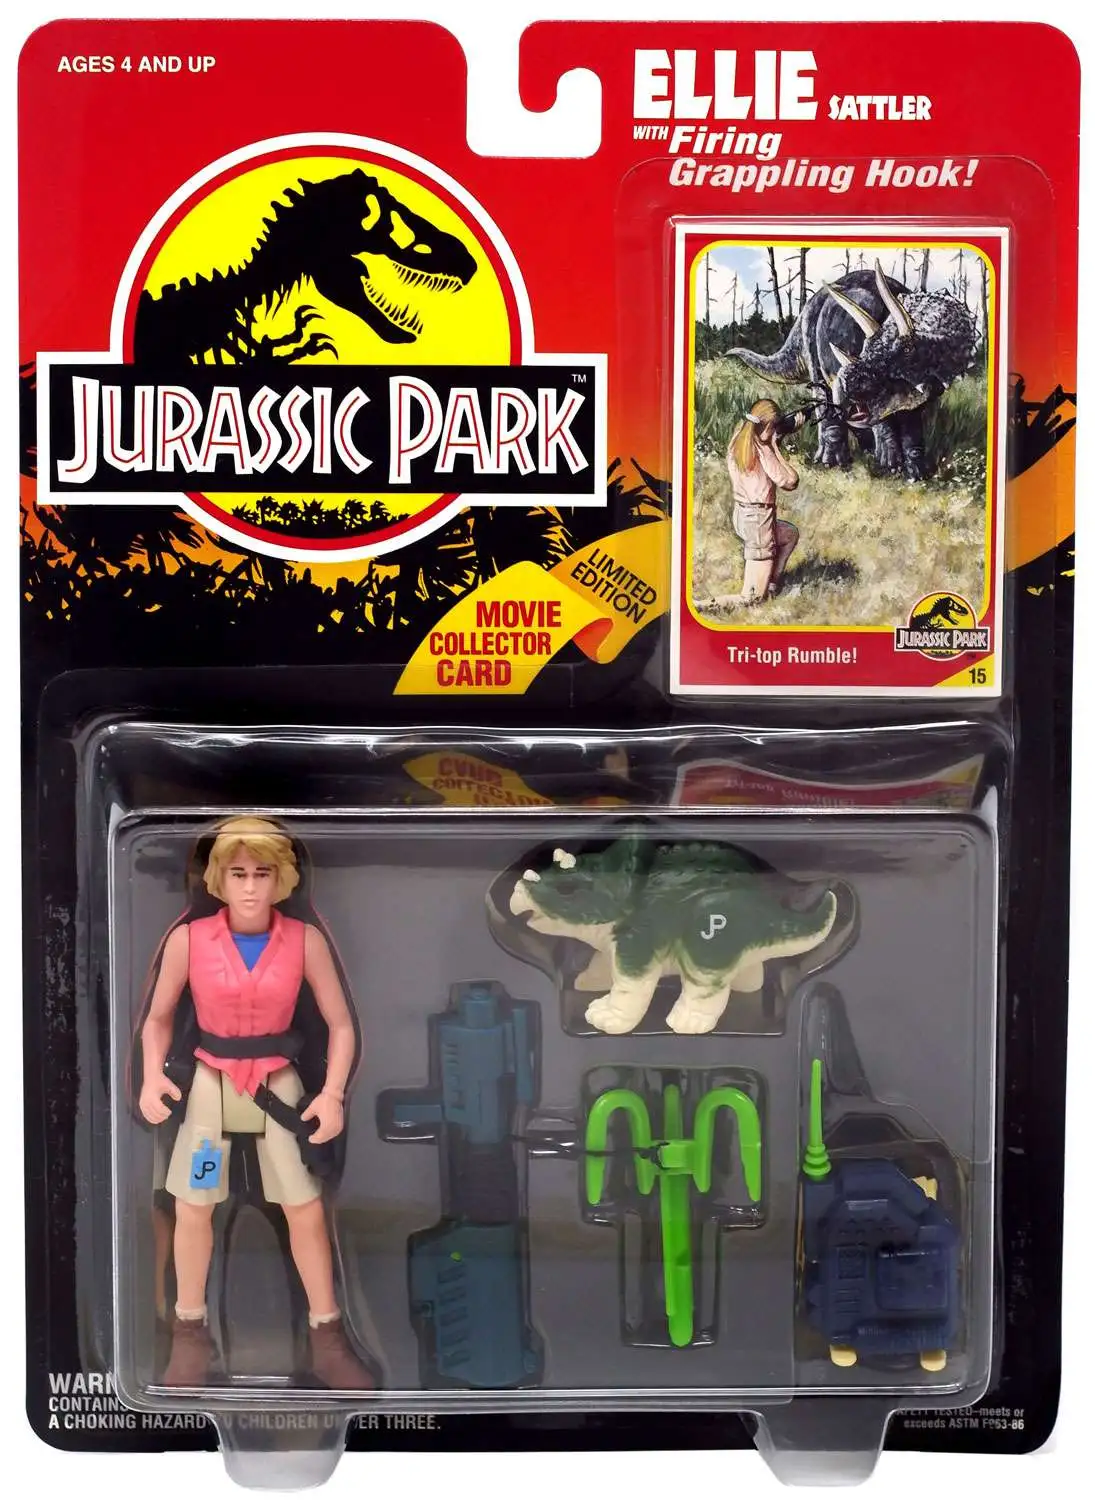 Jurassic Park Ellie Sattler Action Figure Fire Grappling Hook